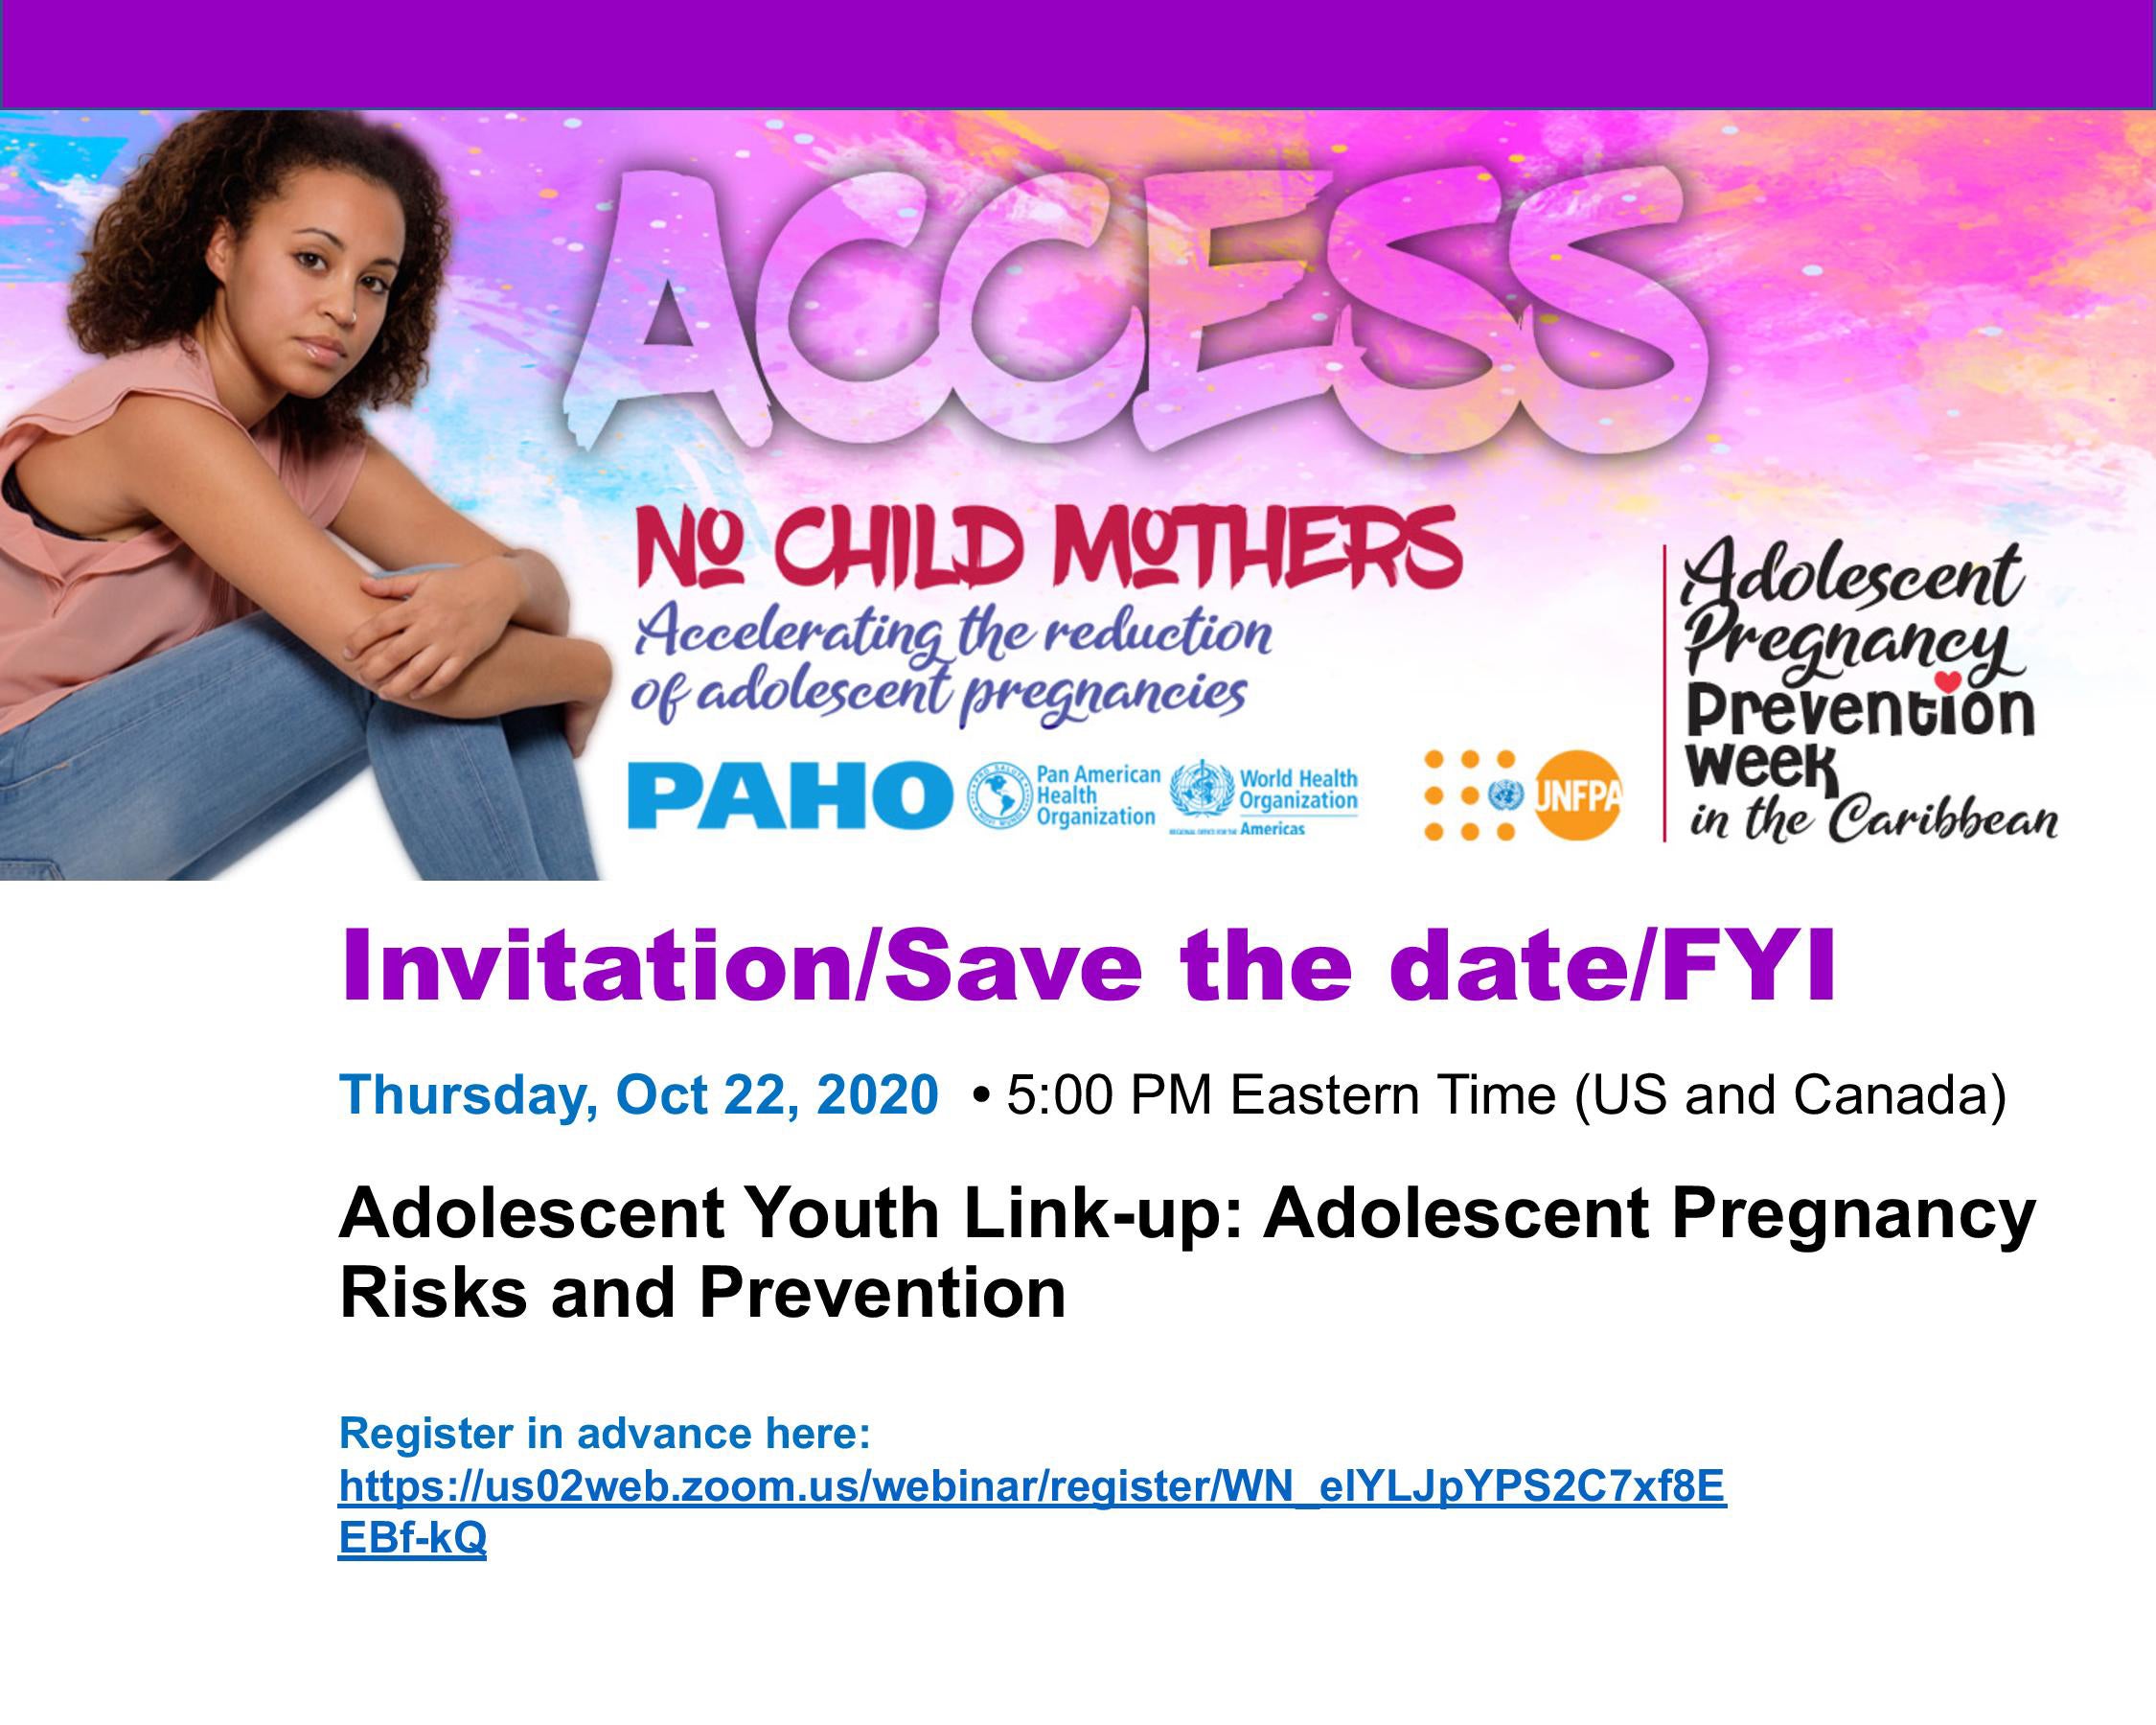 Adolescent Pregnancy Prevention Week - Access